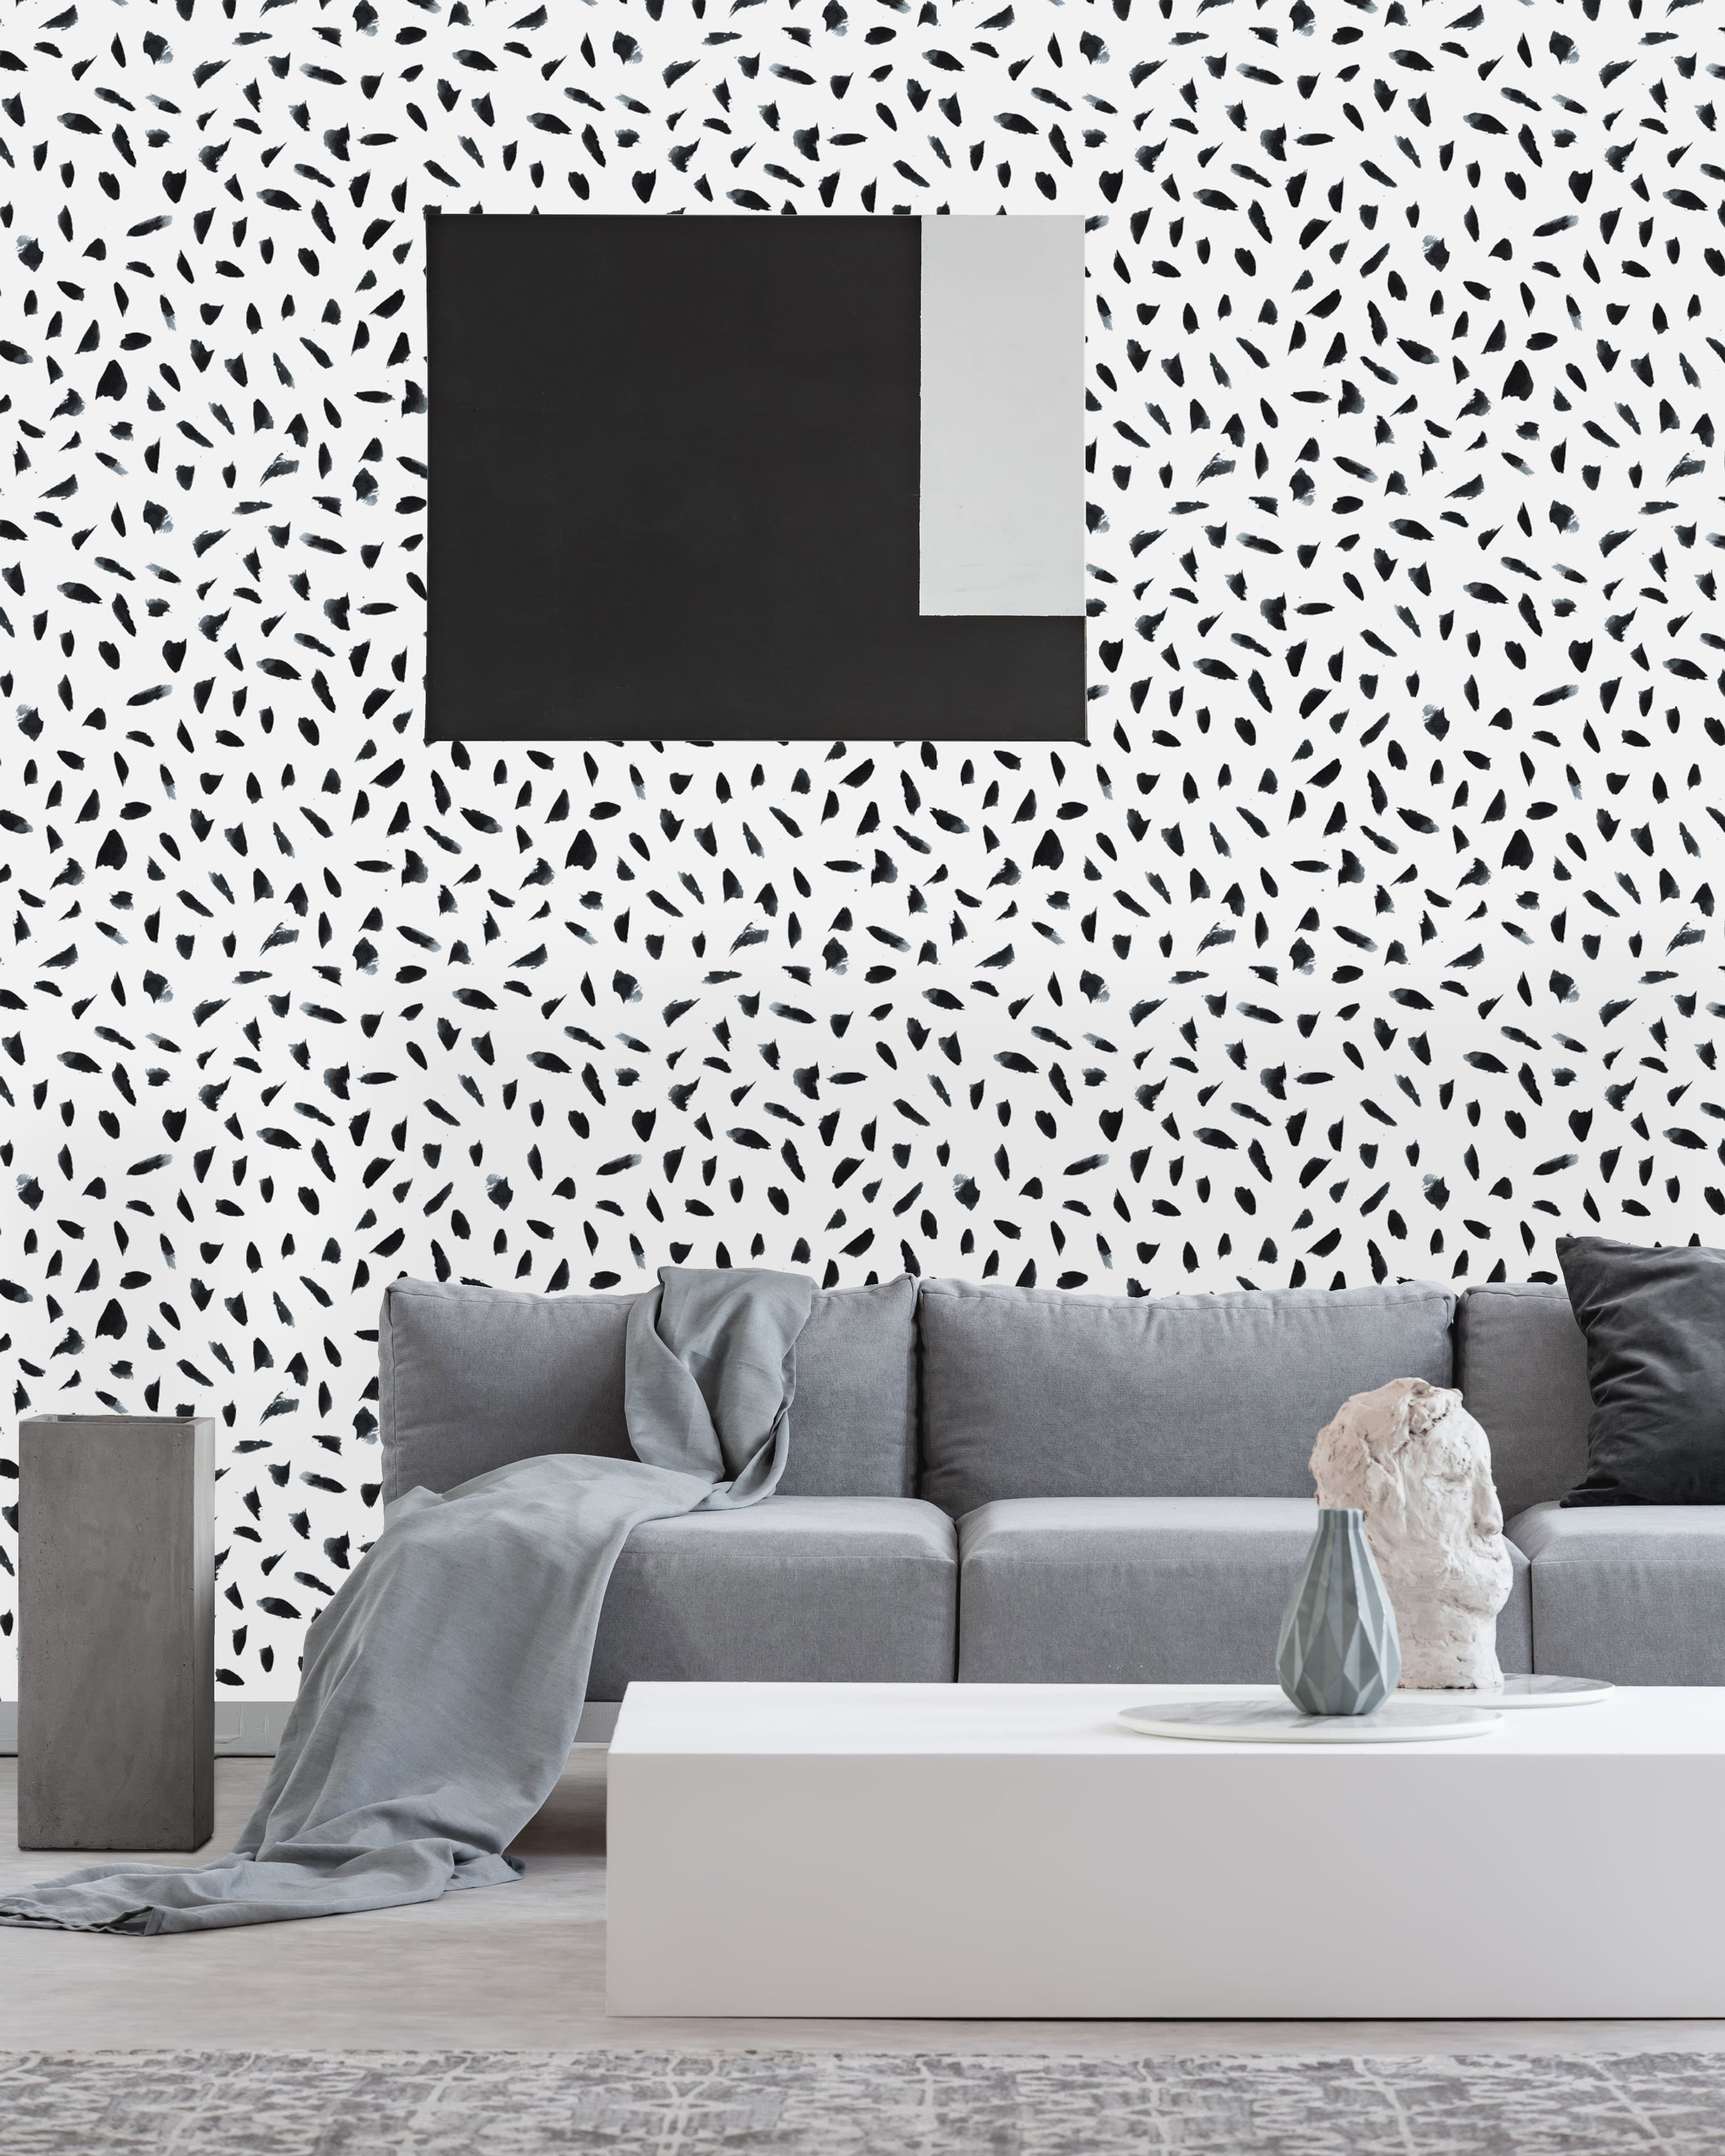 Download Sleek Black Leopard Print Wallpaper